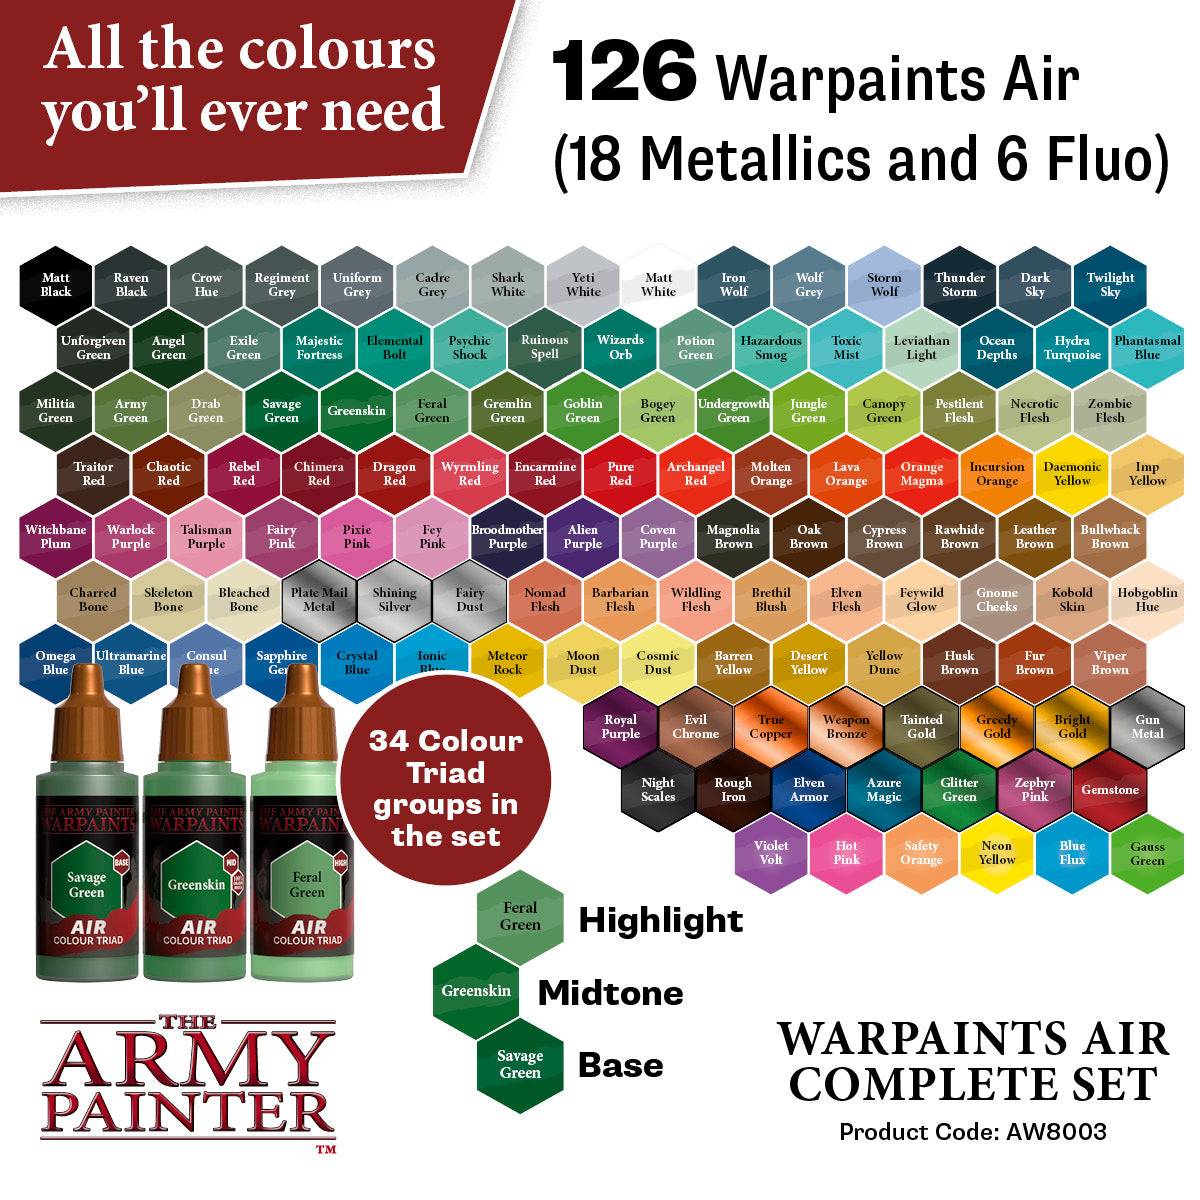 Army Painter Warpaints Air Mega Set - NEW - SEALED IN BOX